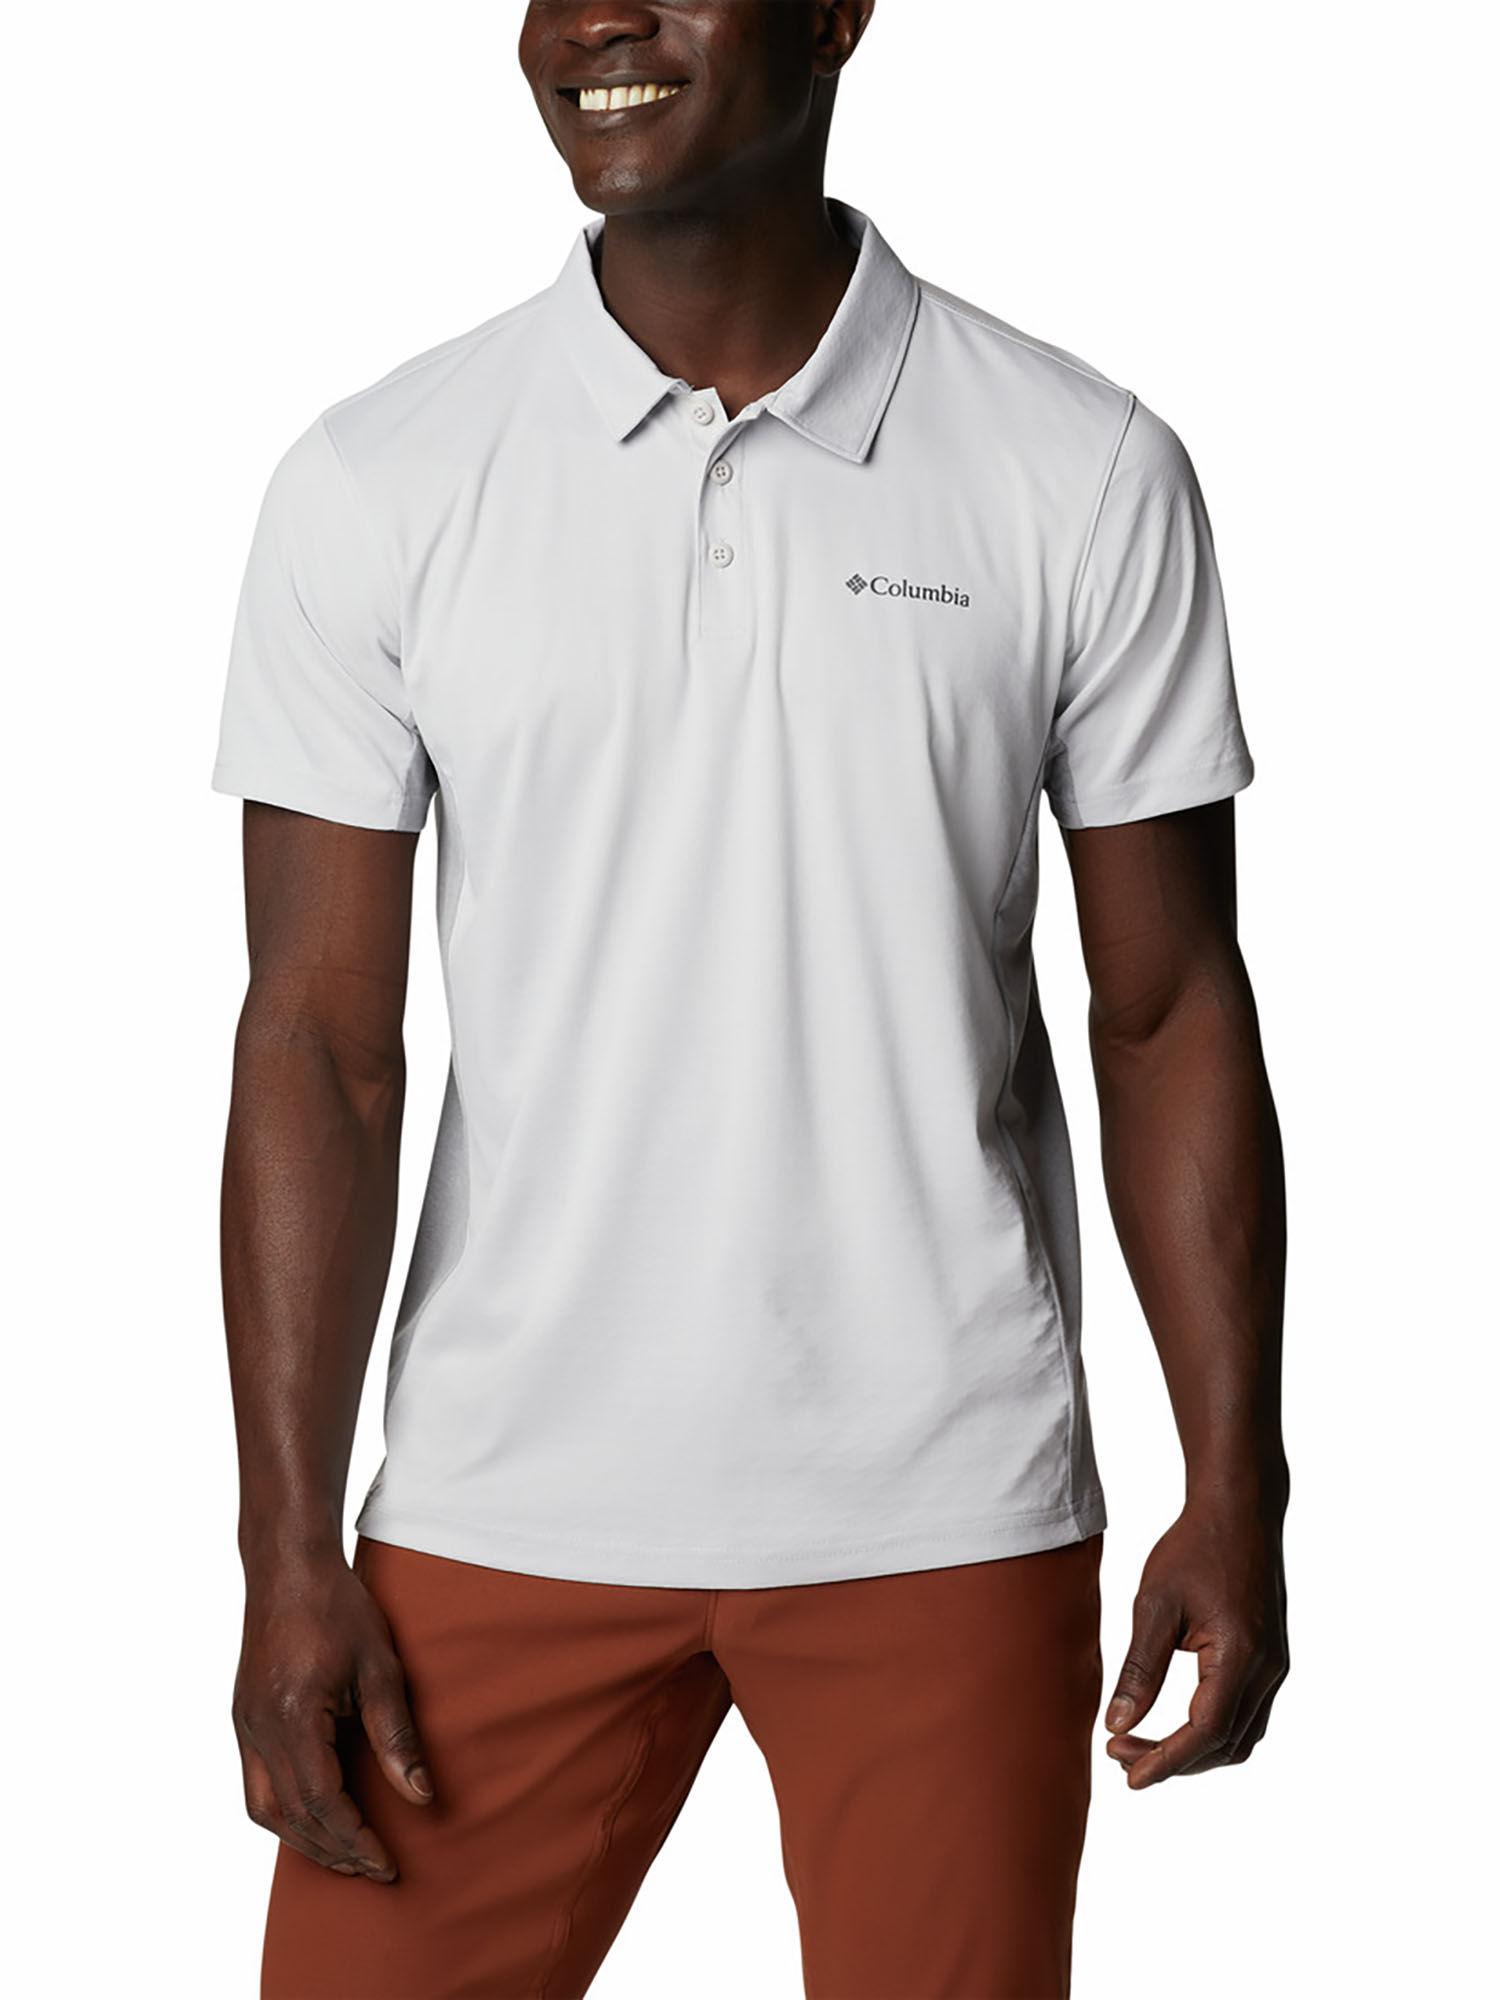 mens white polyester short sleeve zero ice cirro cool polo t-shirt